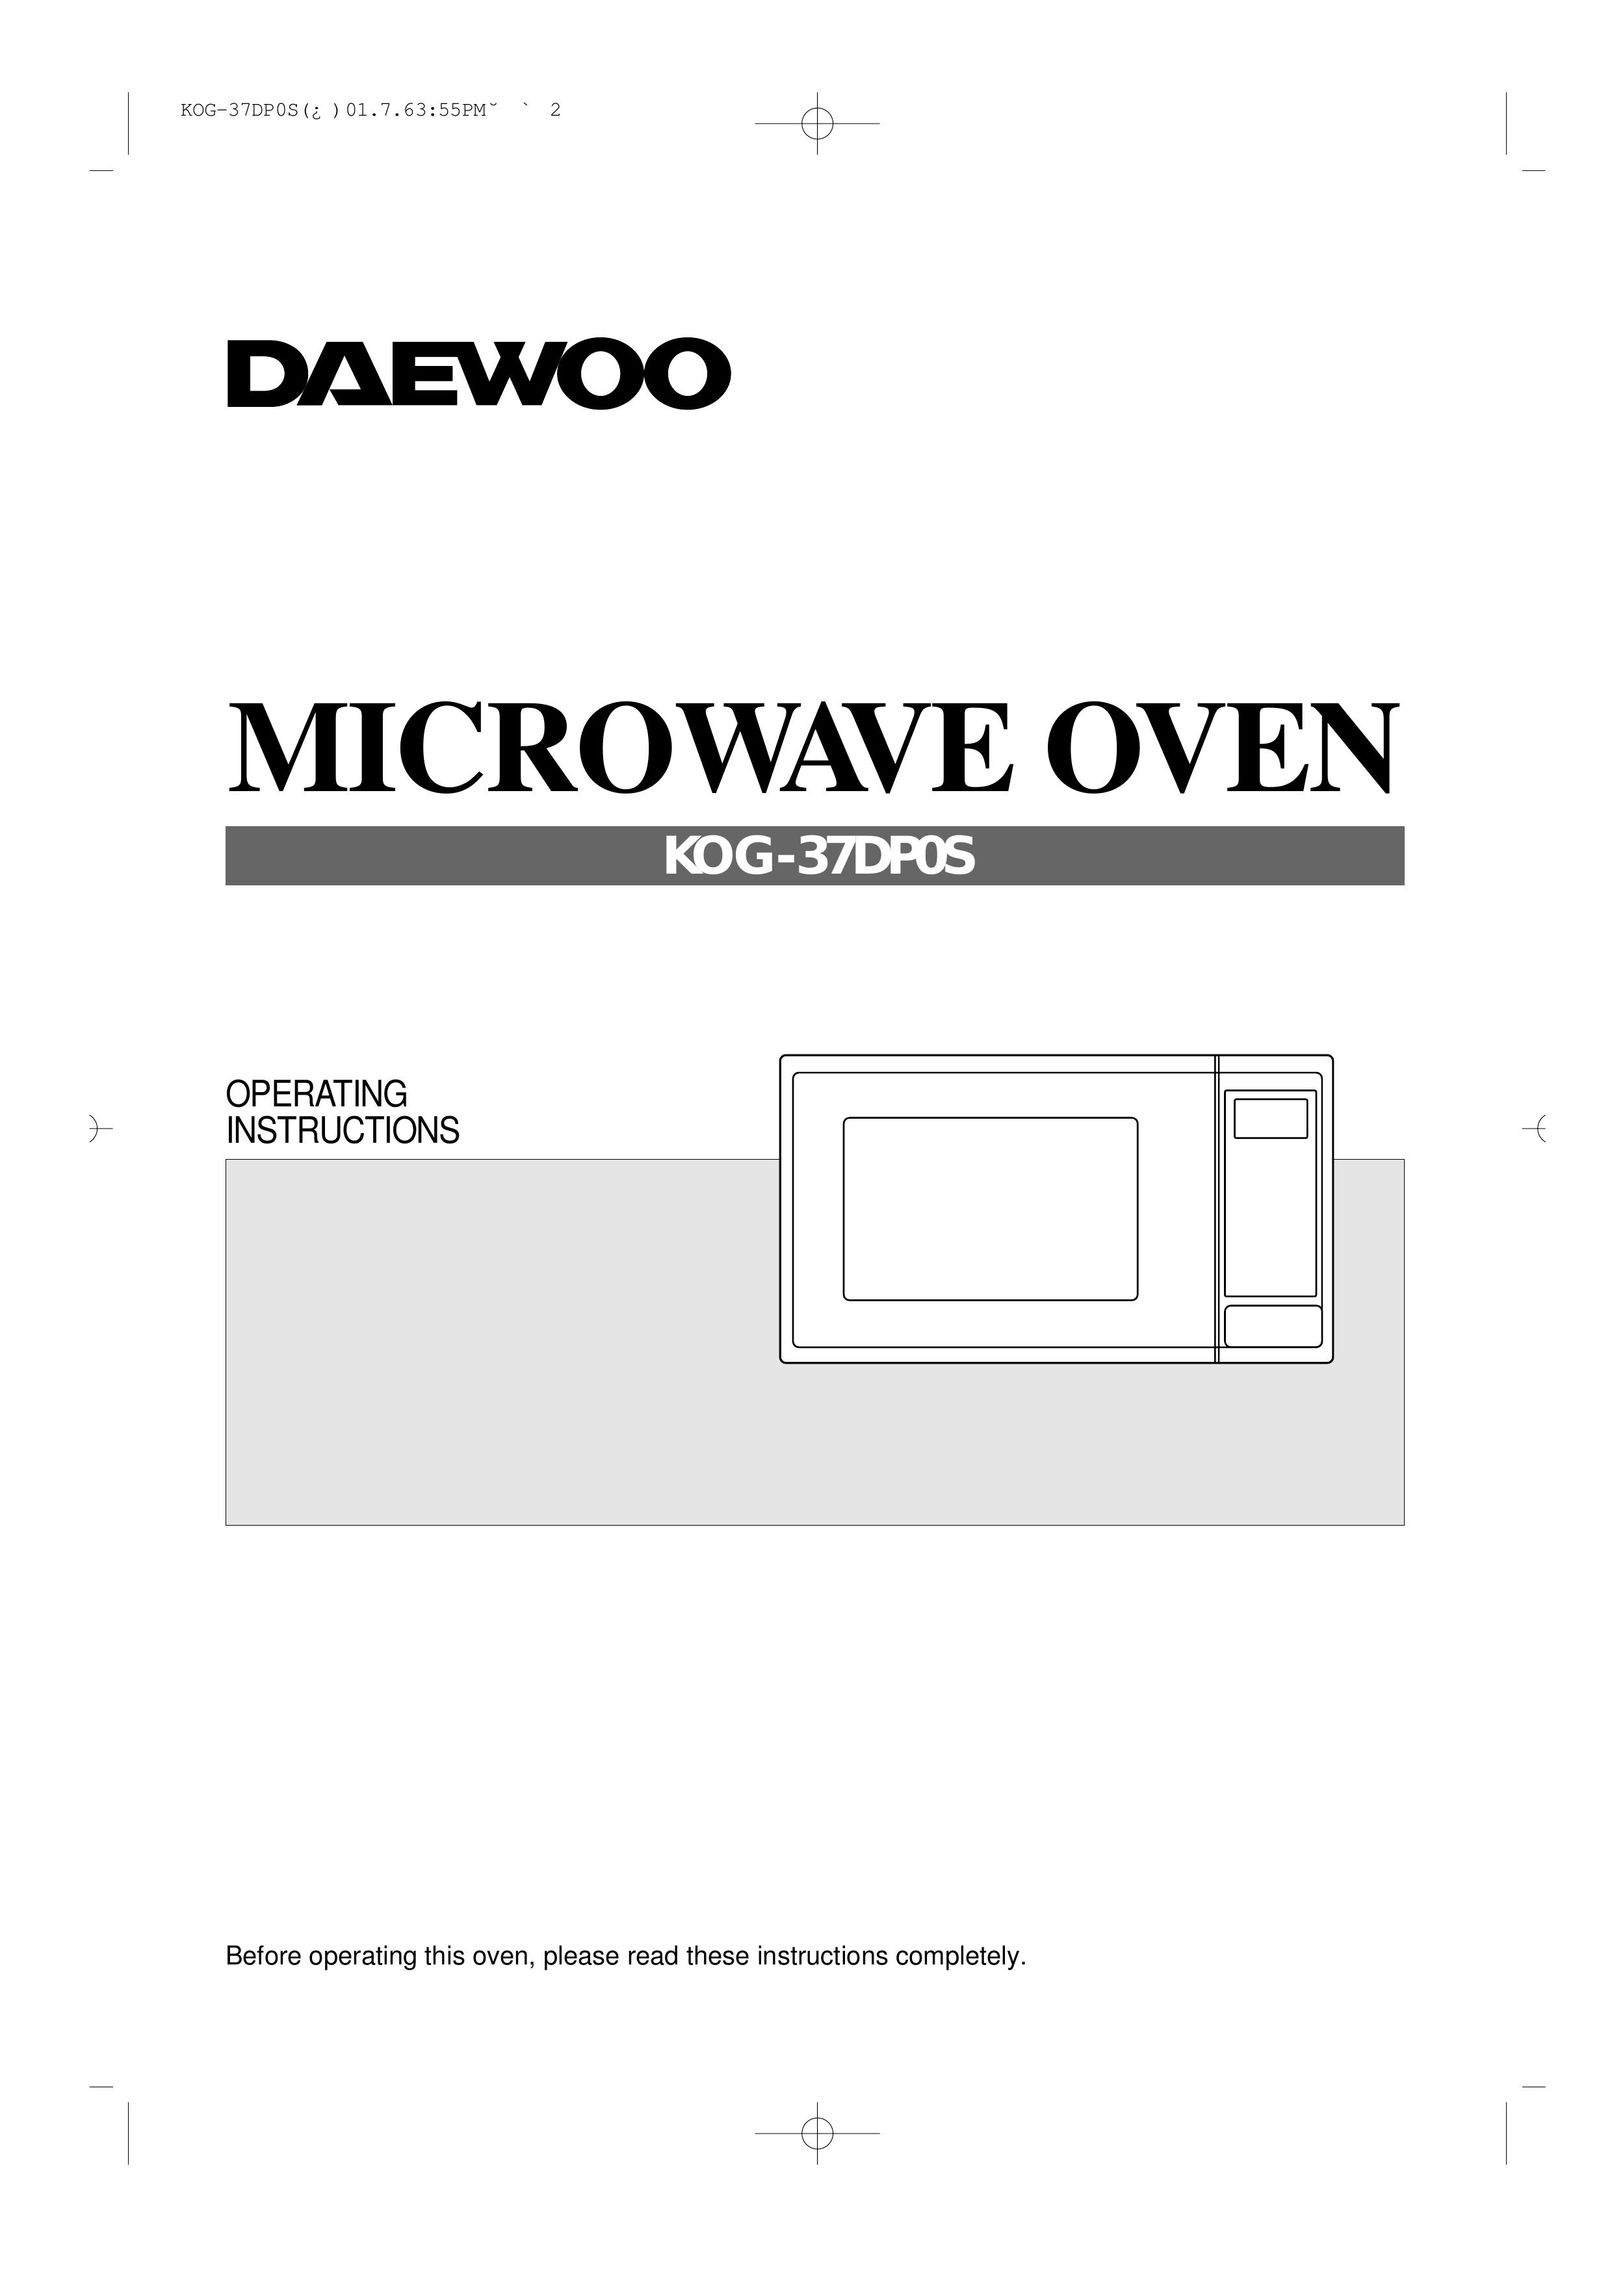 Daewoo KOG-37DP0S Microwave Oven User Manual